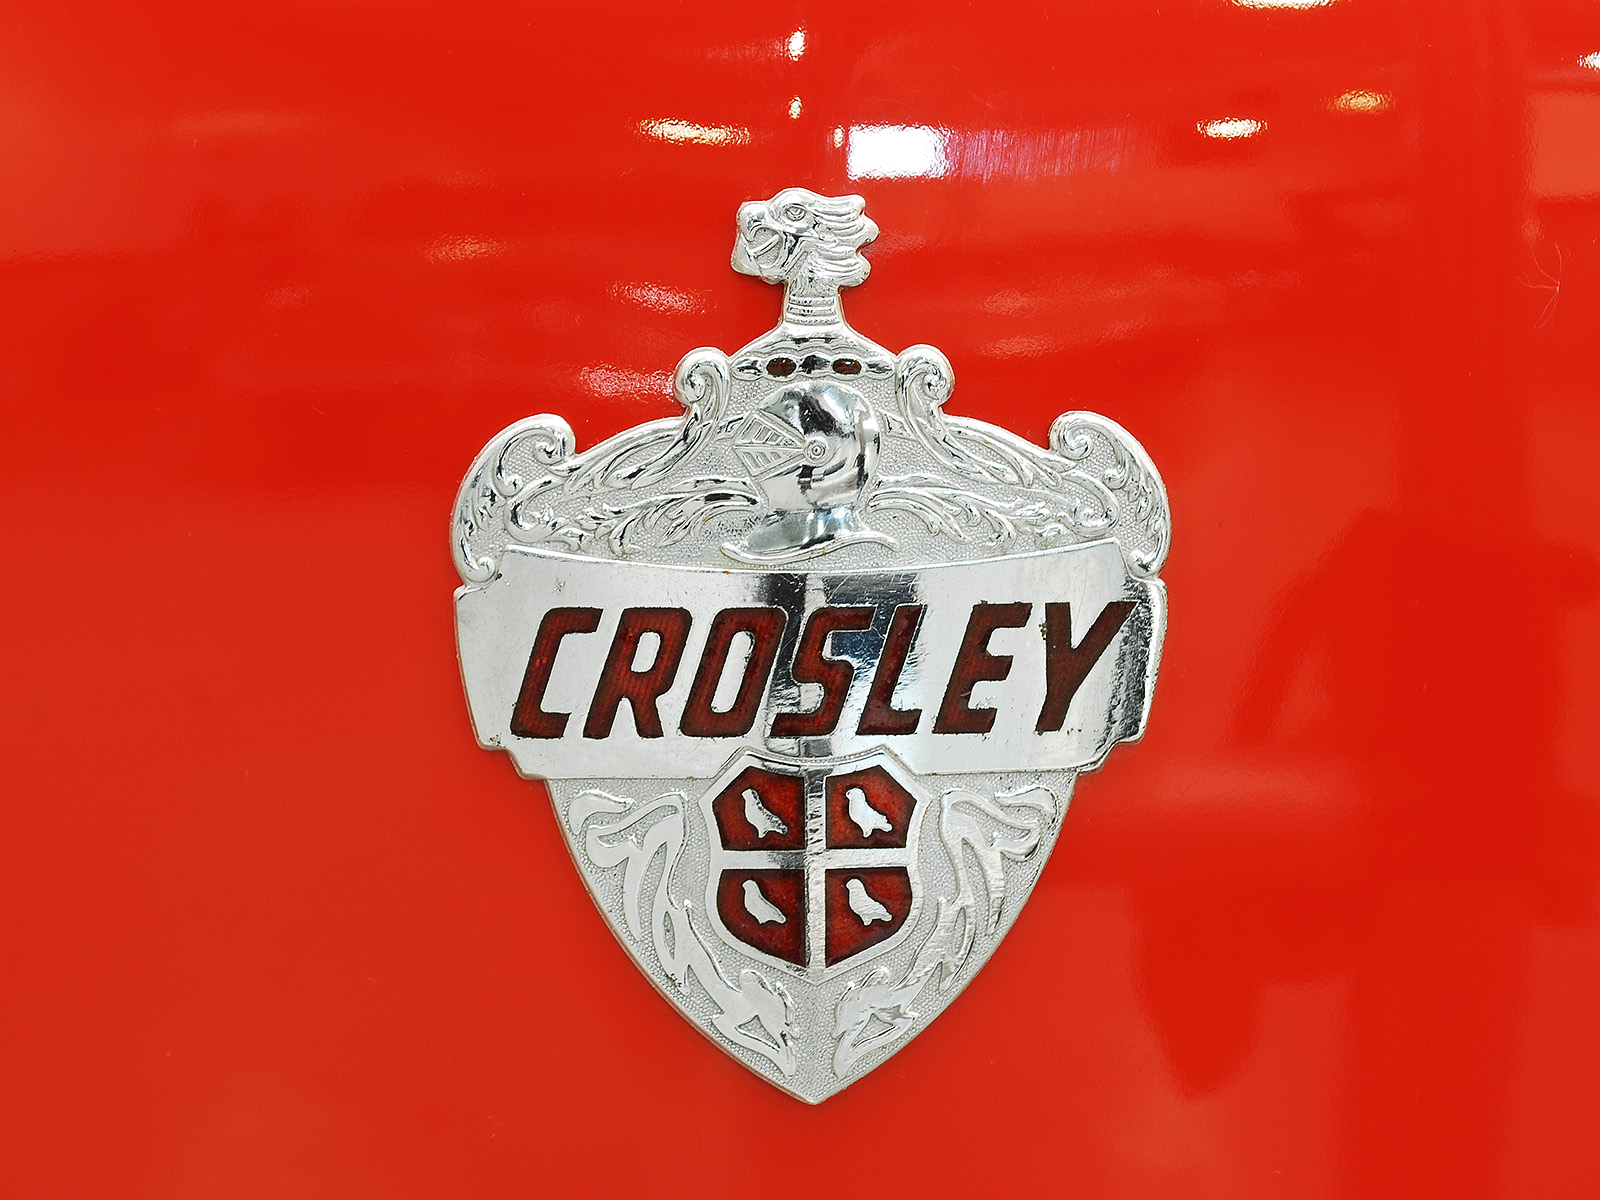 1947 crosley cc